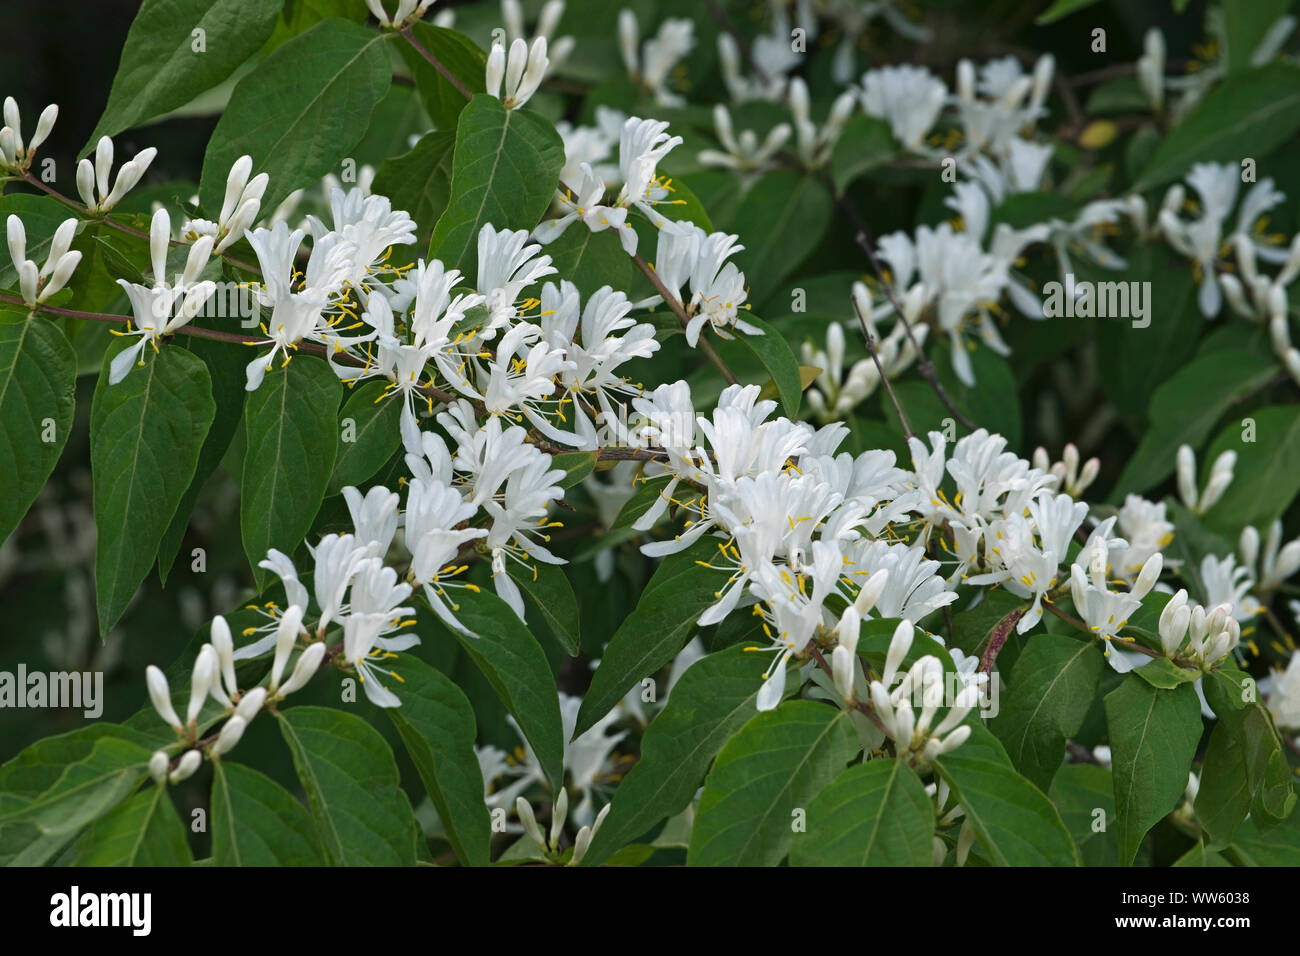 Amur honeysuckle, Lonicera maackii, Mass of small white flowers growing outdoor. Stock Photo